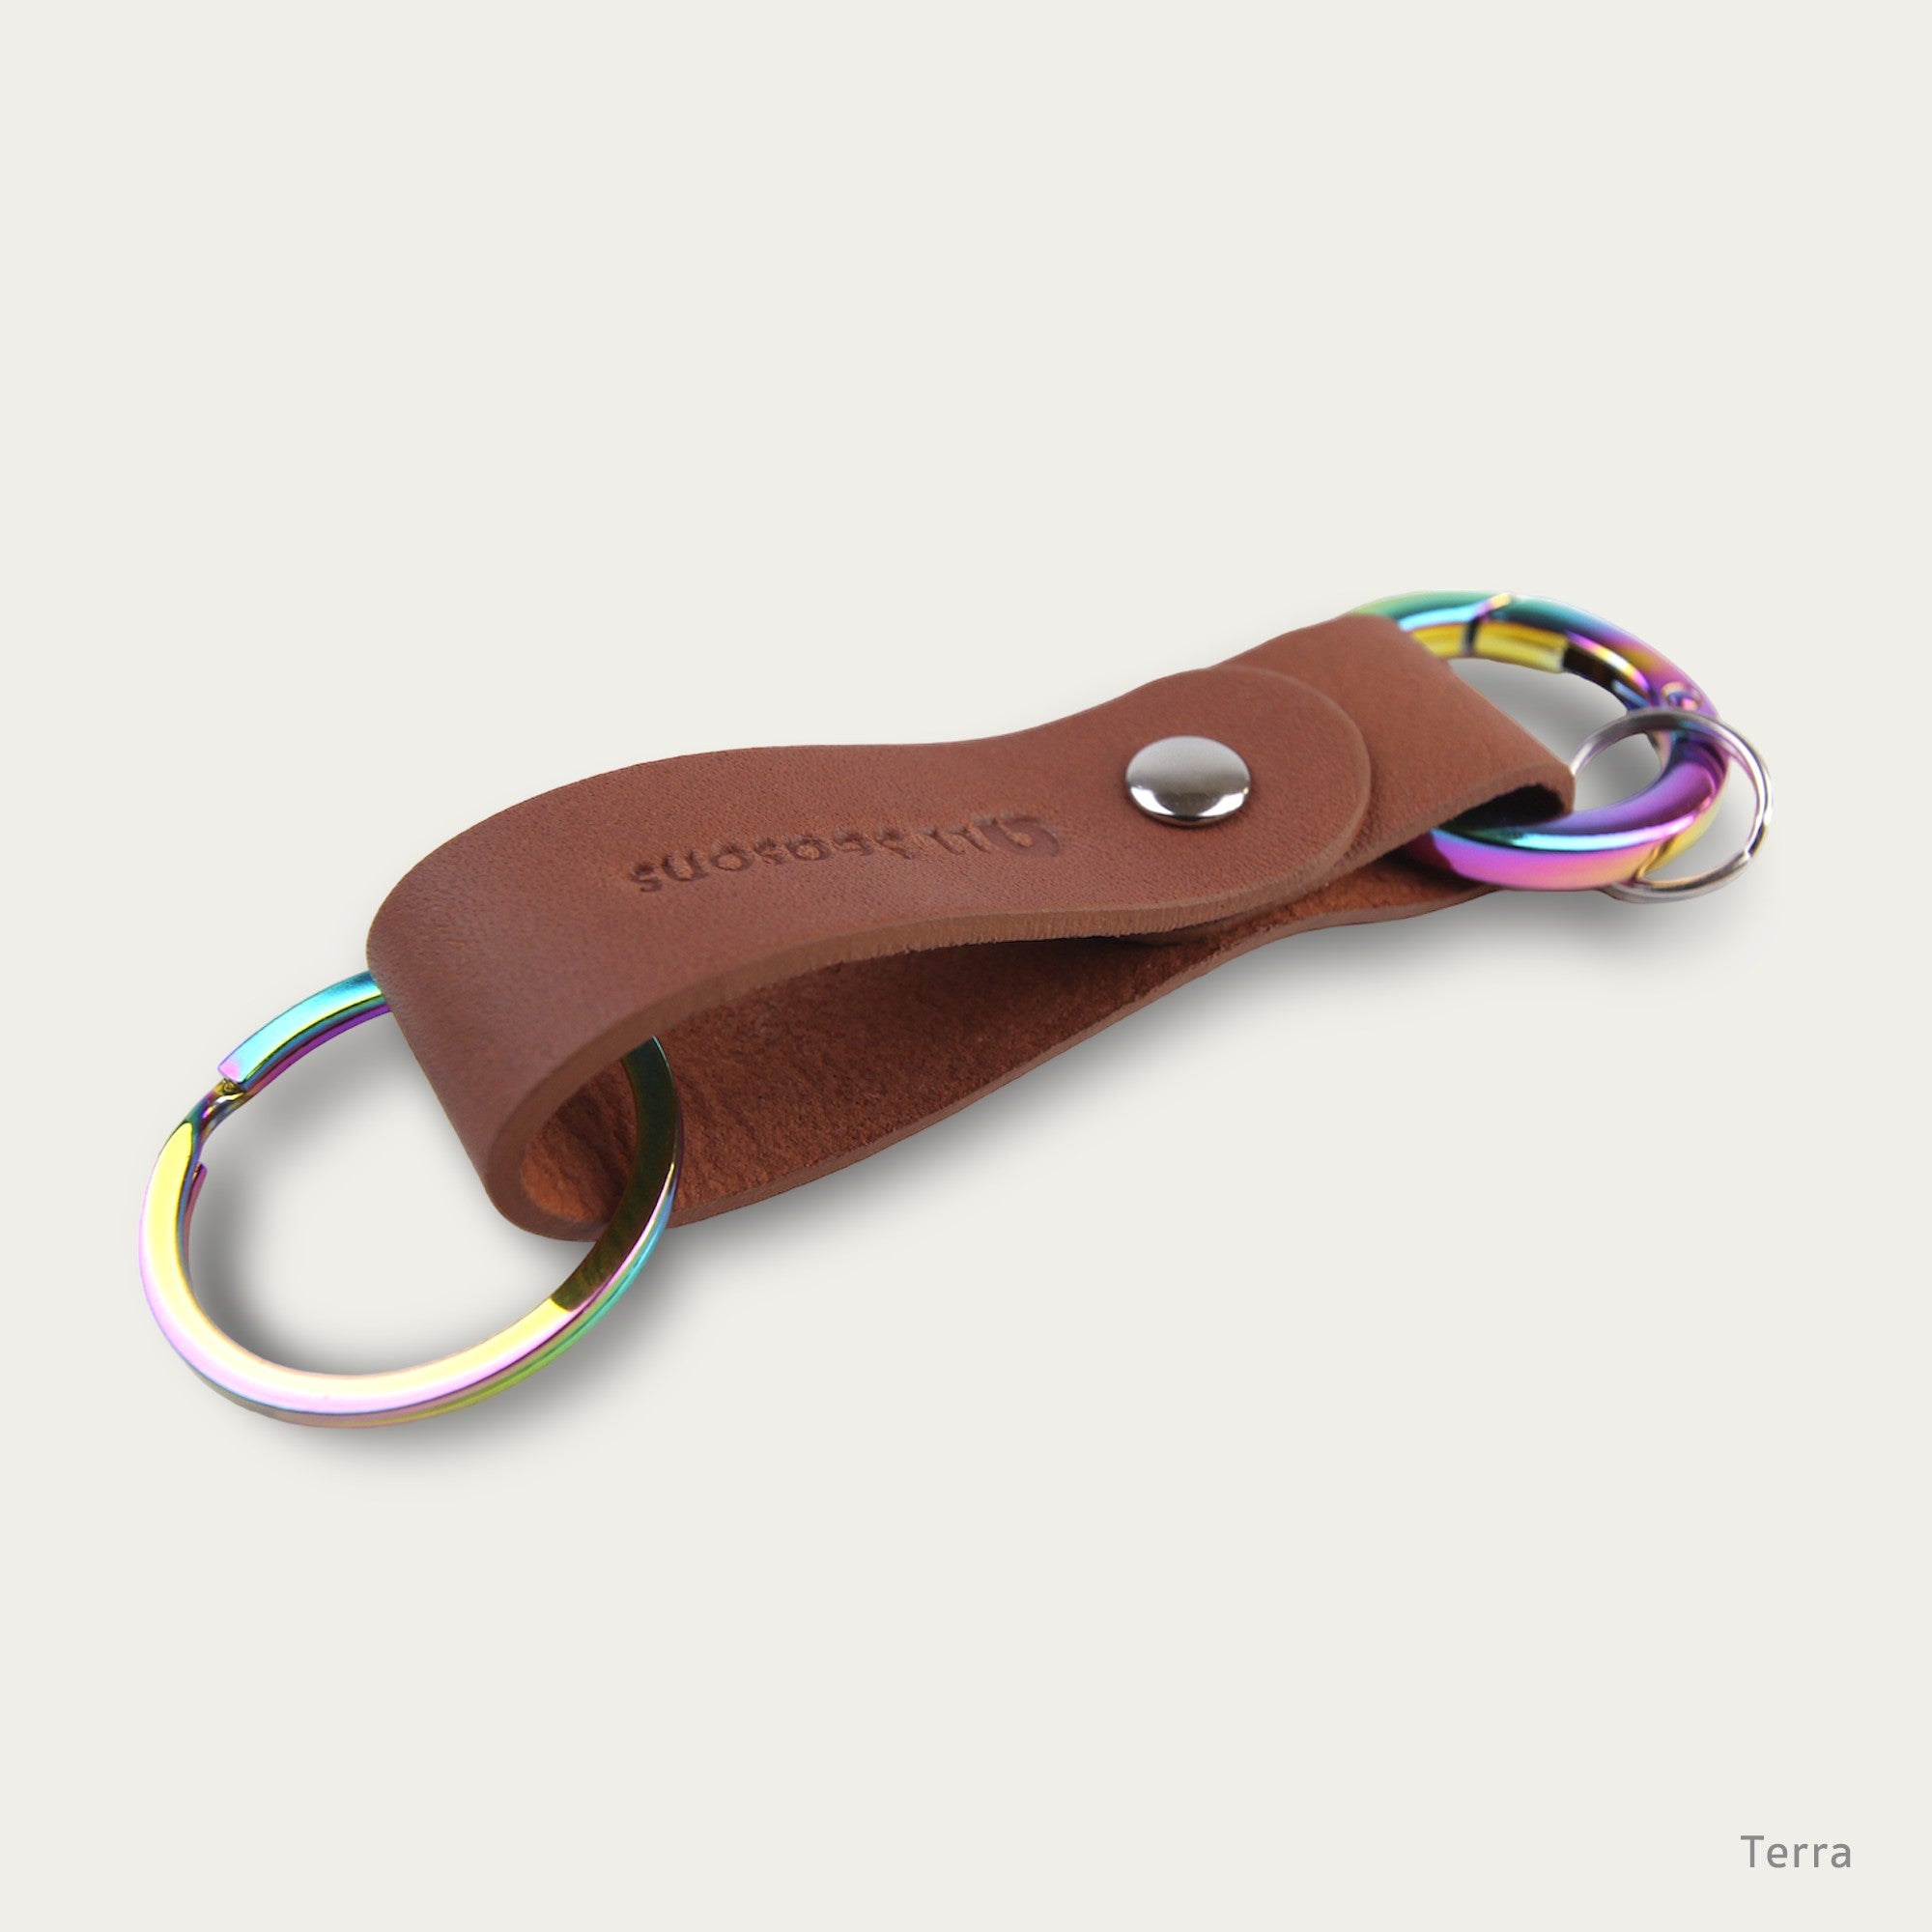 2 Rainbow Keychain Circular&Flat Round [Mill Grain Leather] V.2